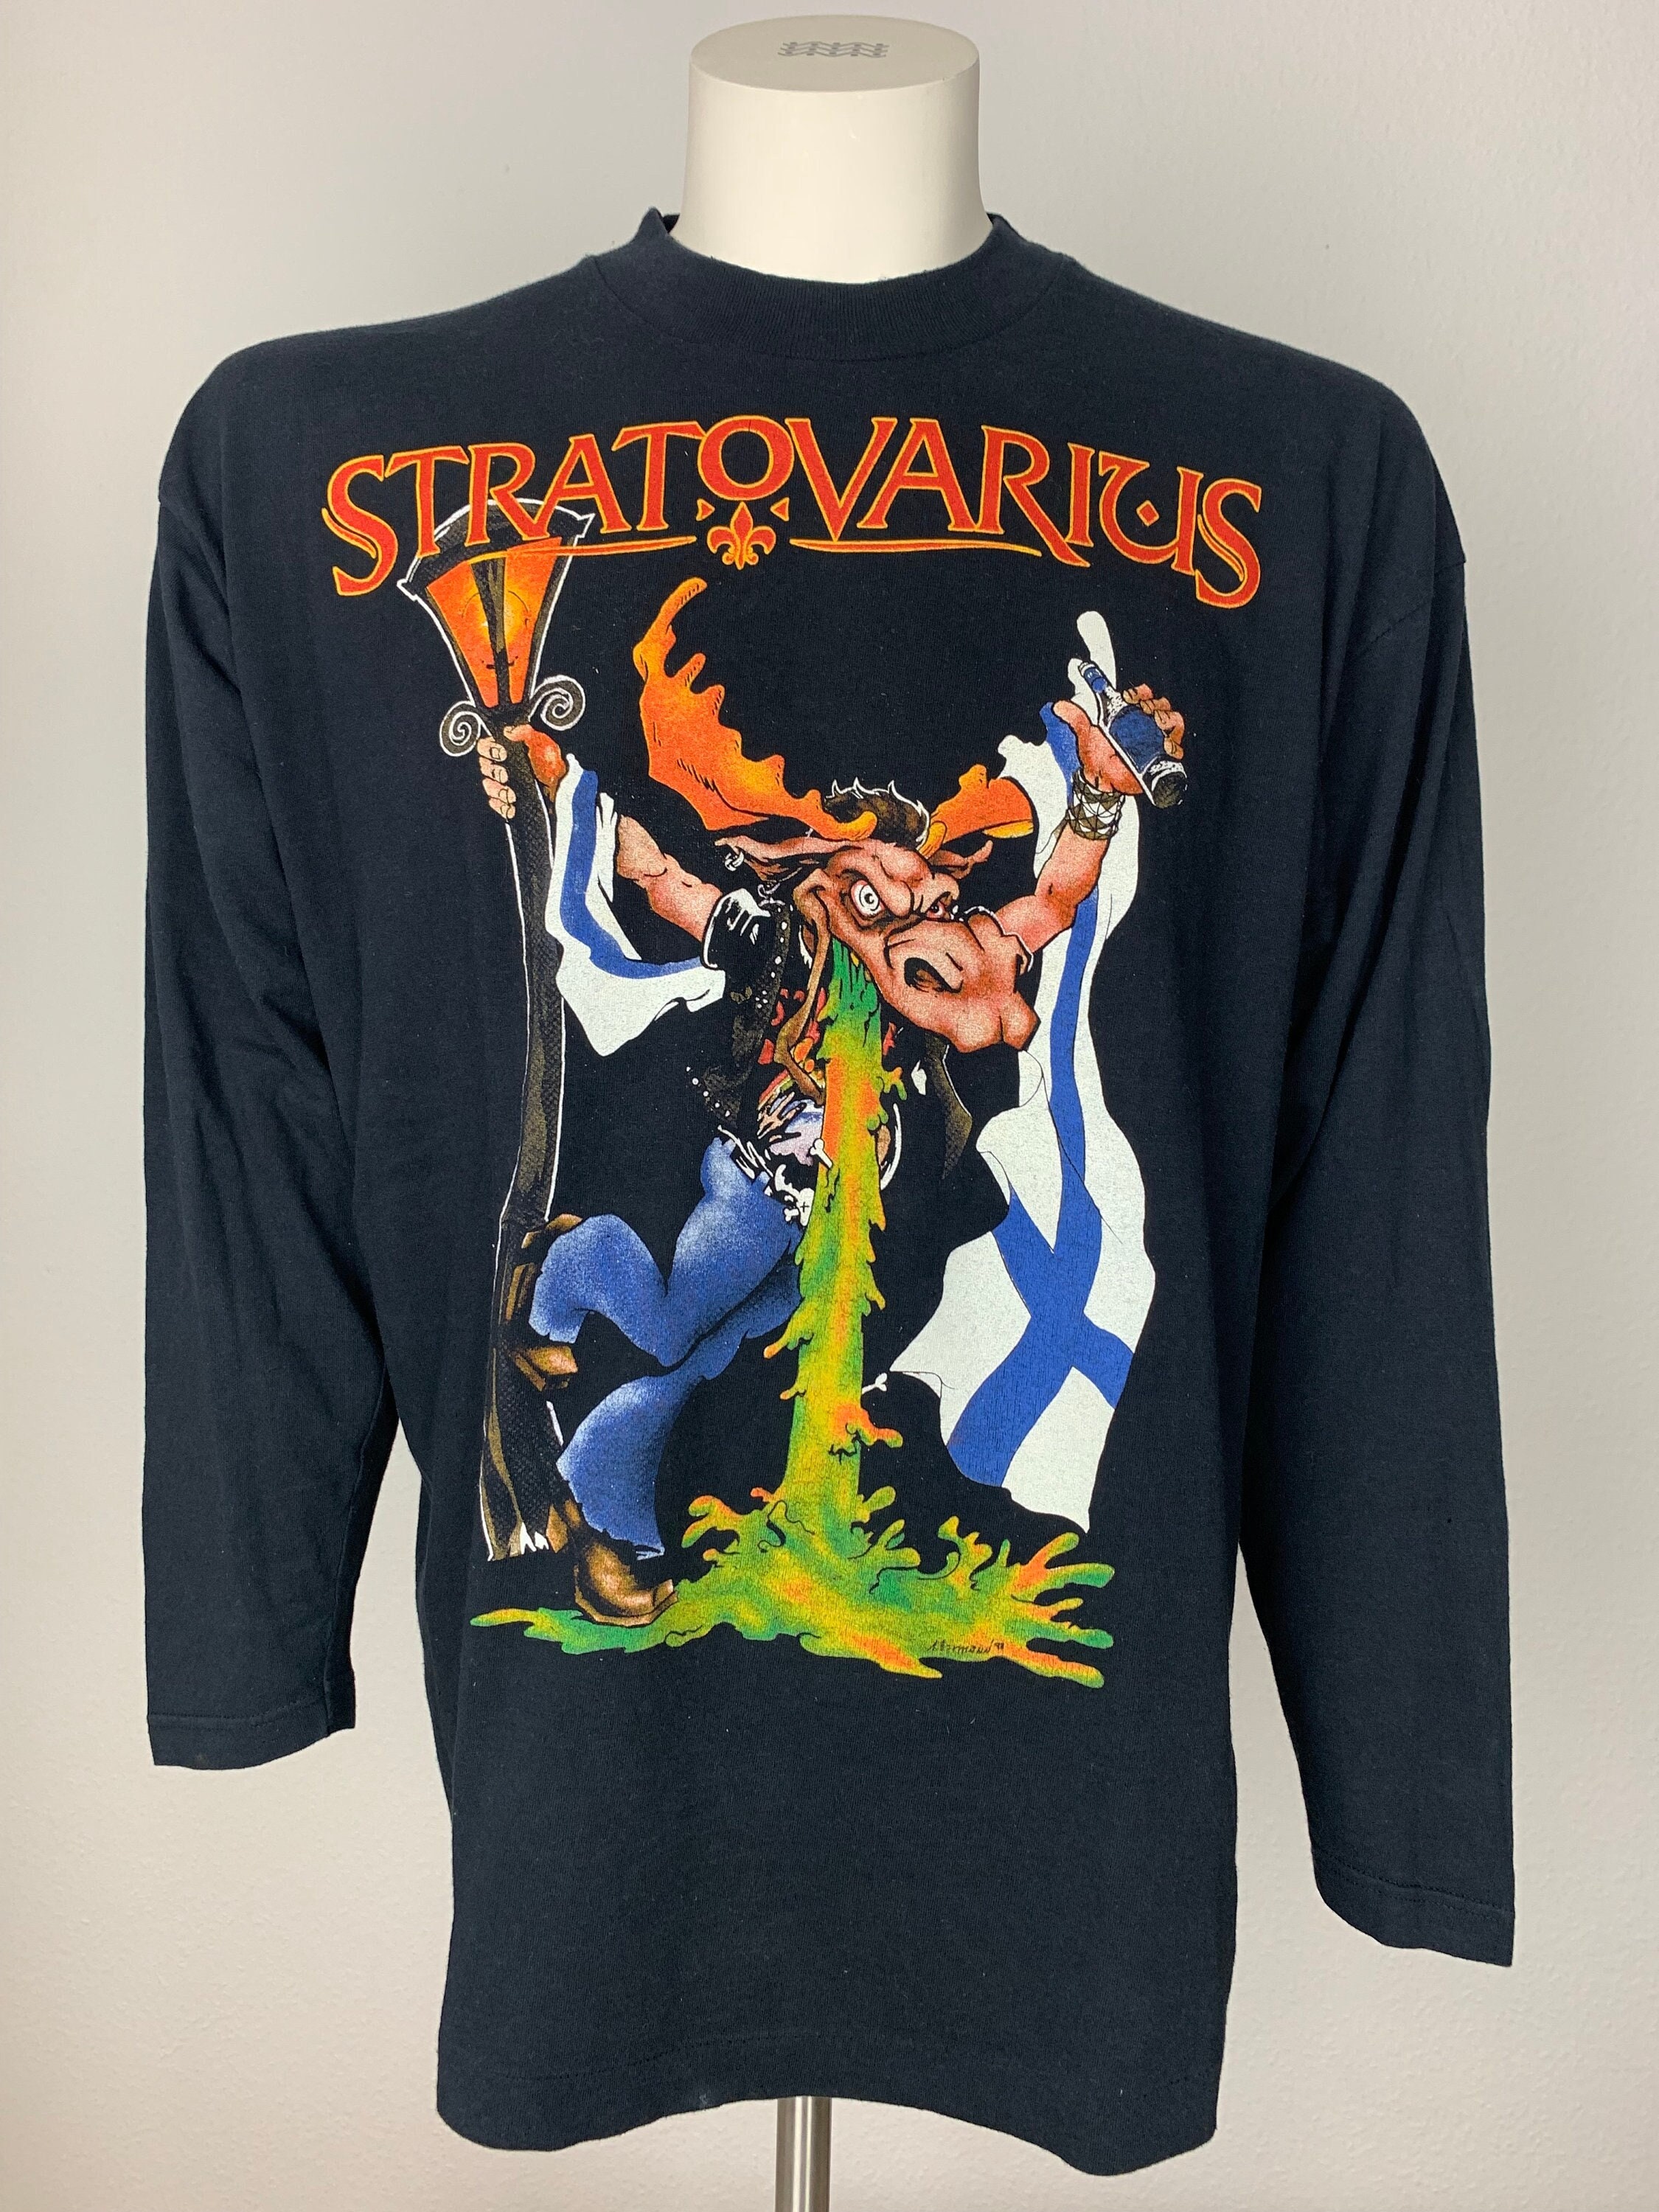 STRATOVARIUS THE CHOSEN ONES - Best Rock T-shirts